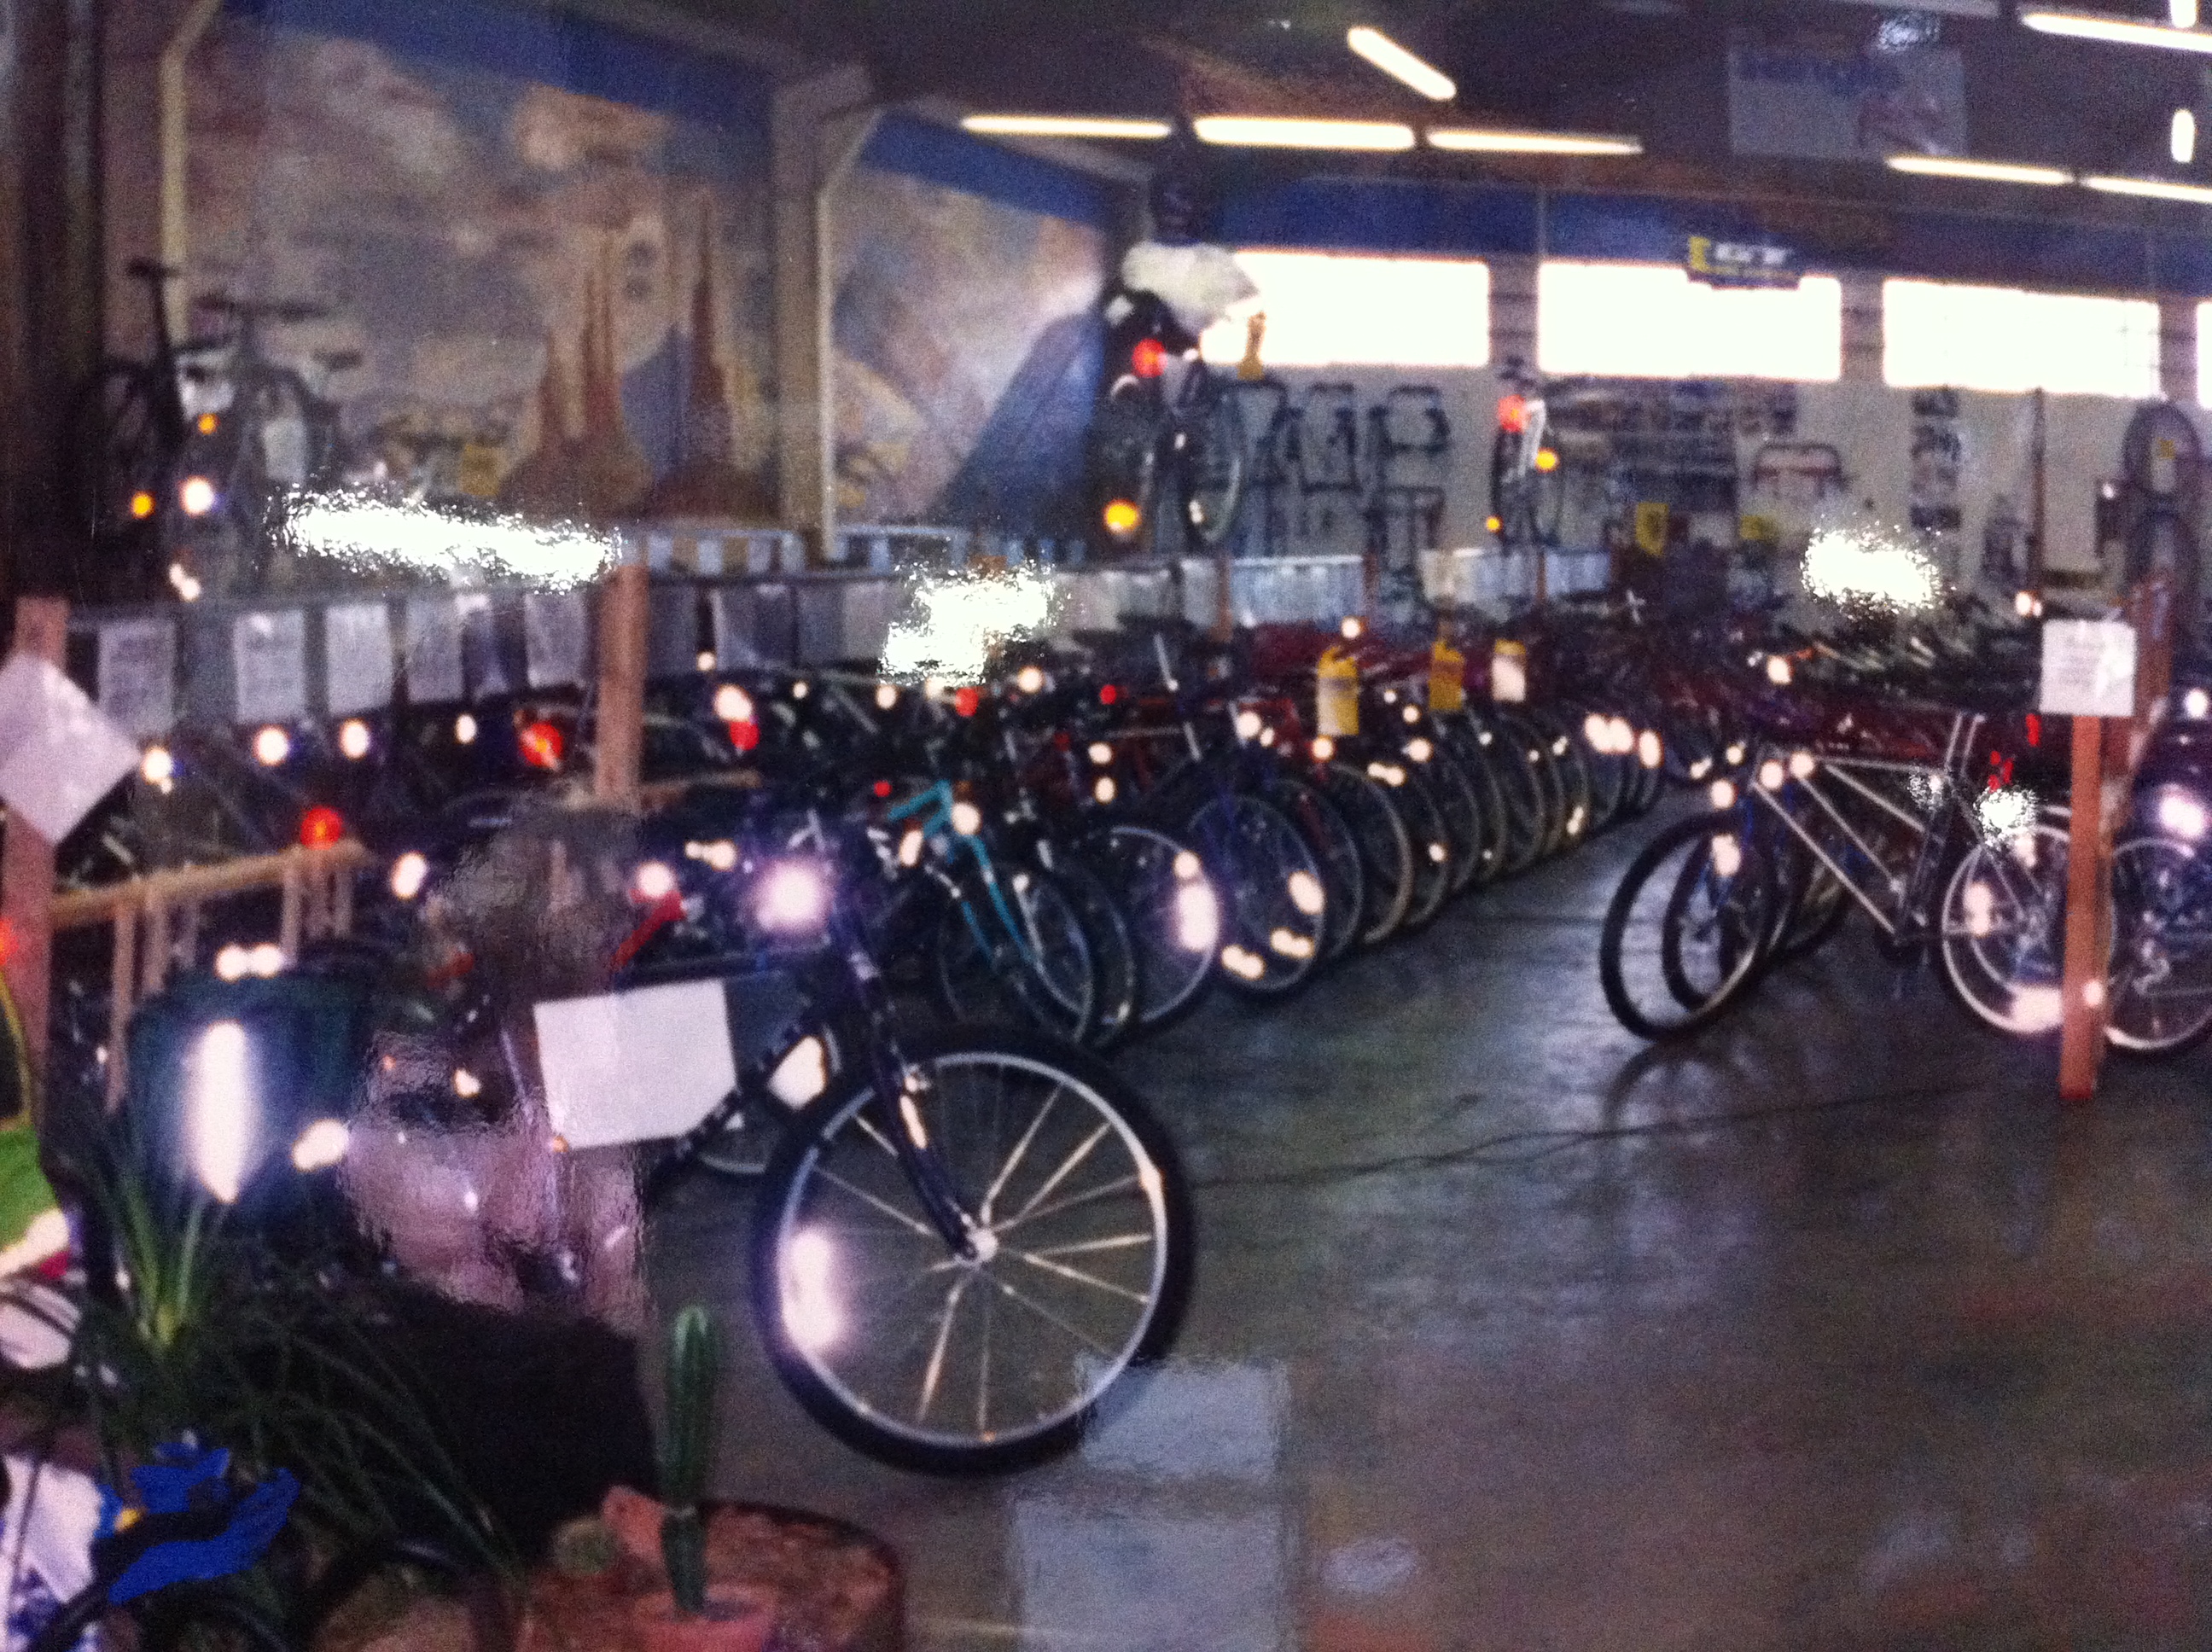 Bicycle Warehouse